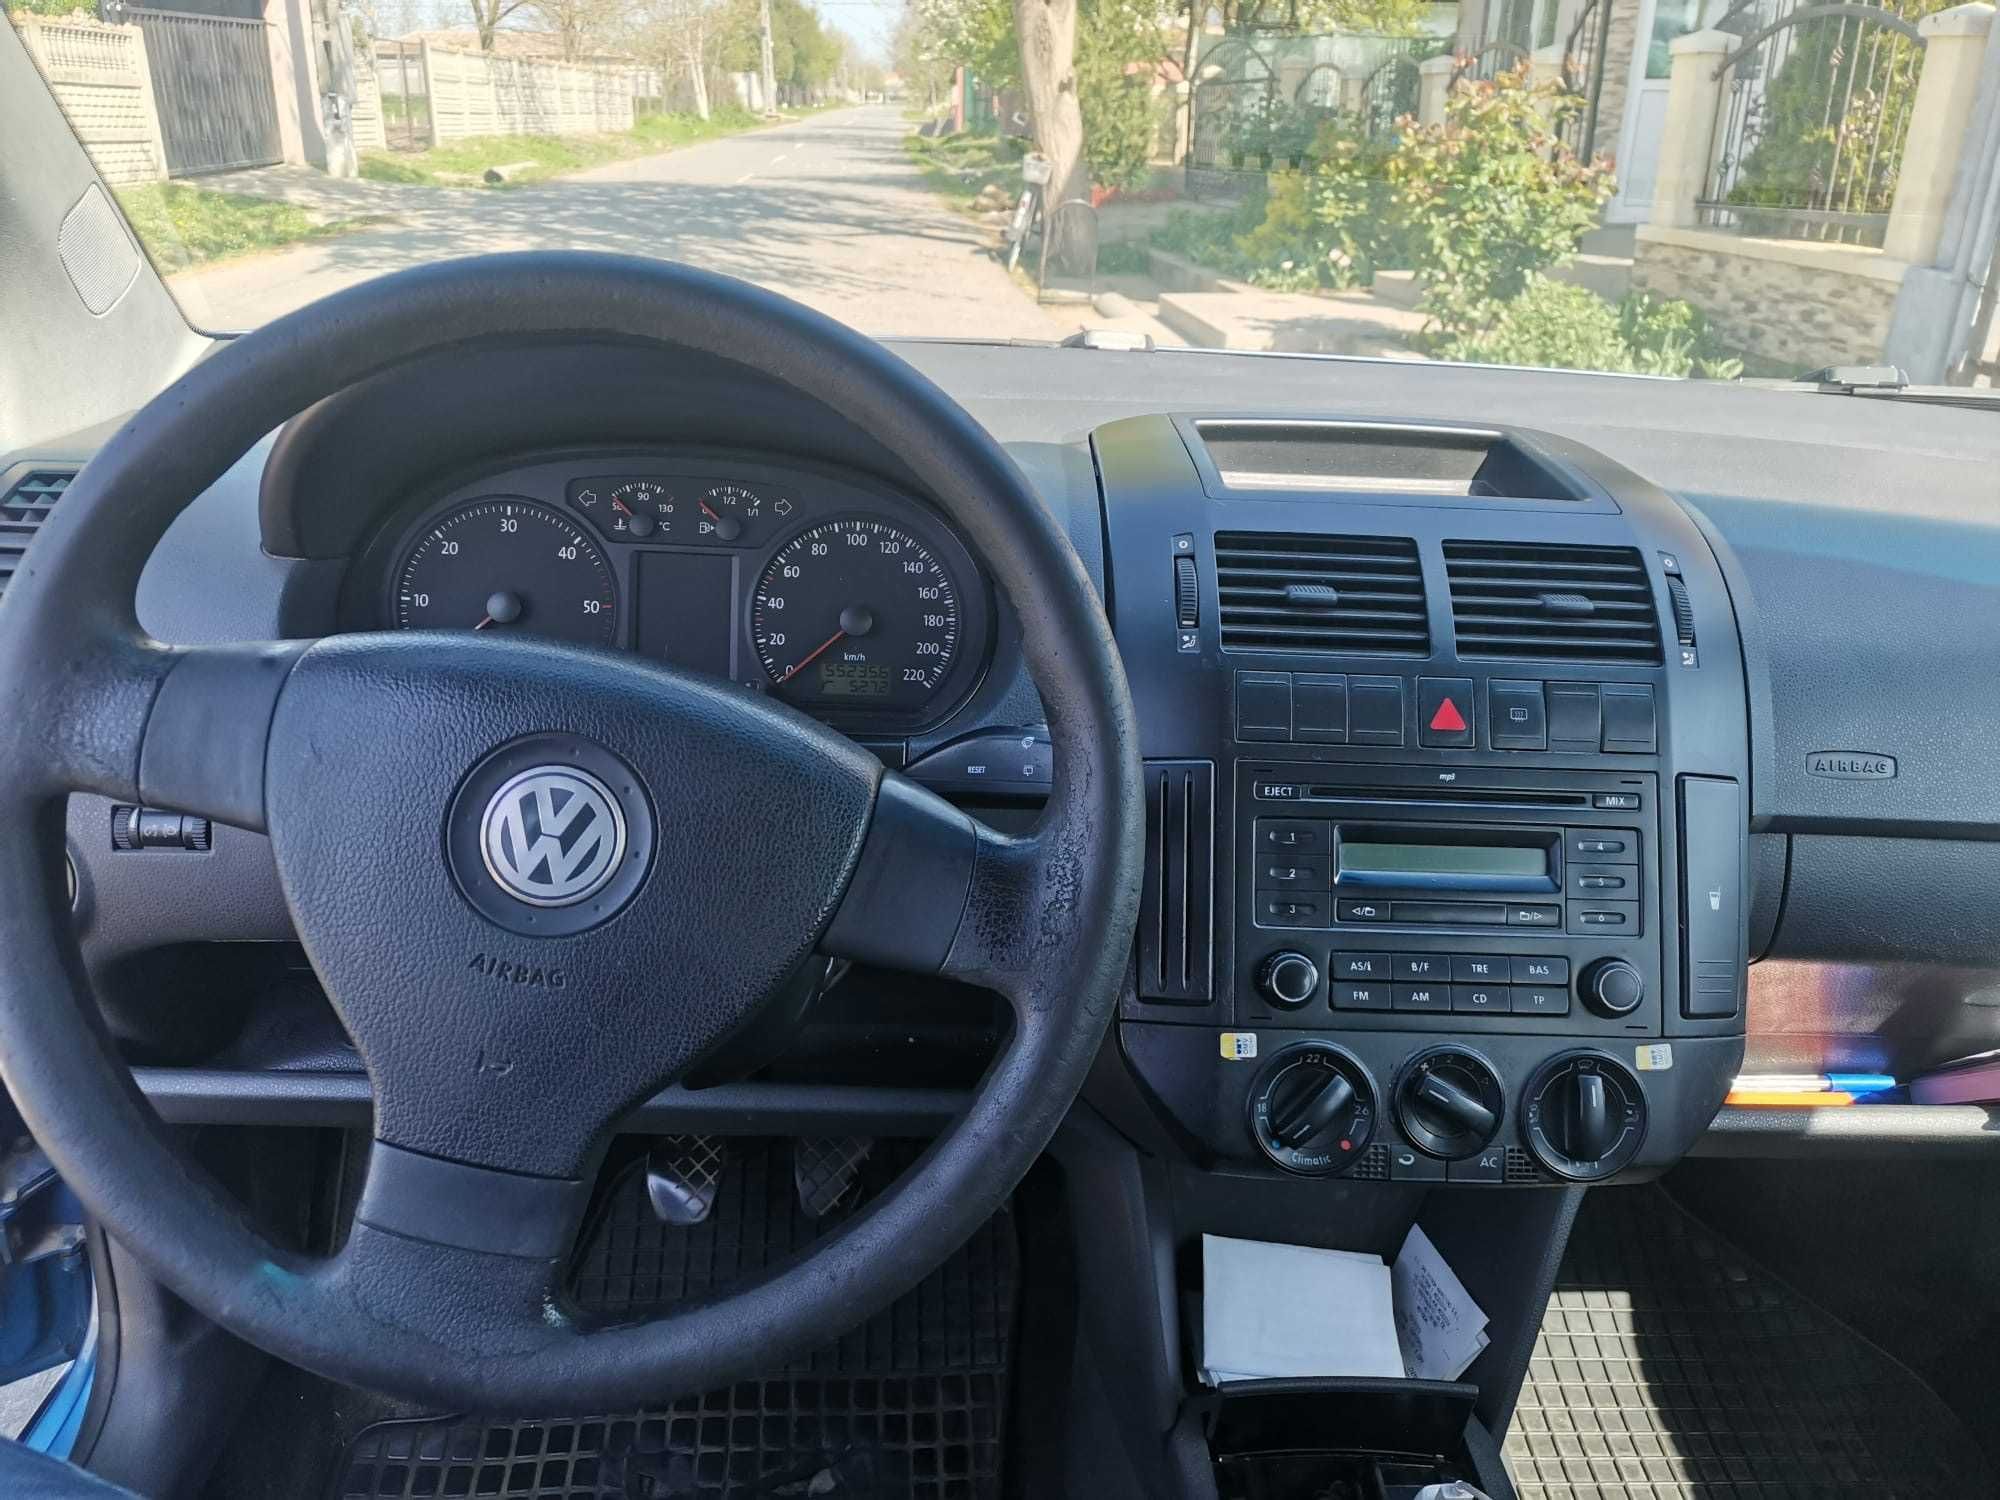 VW Polo 1.5 diesel